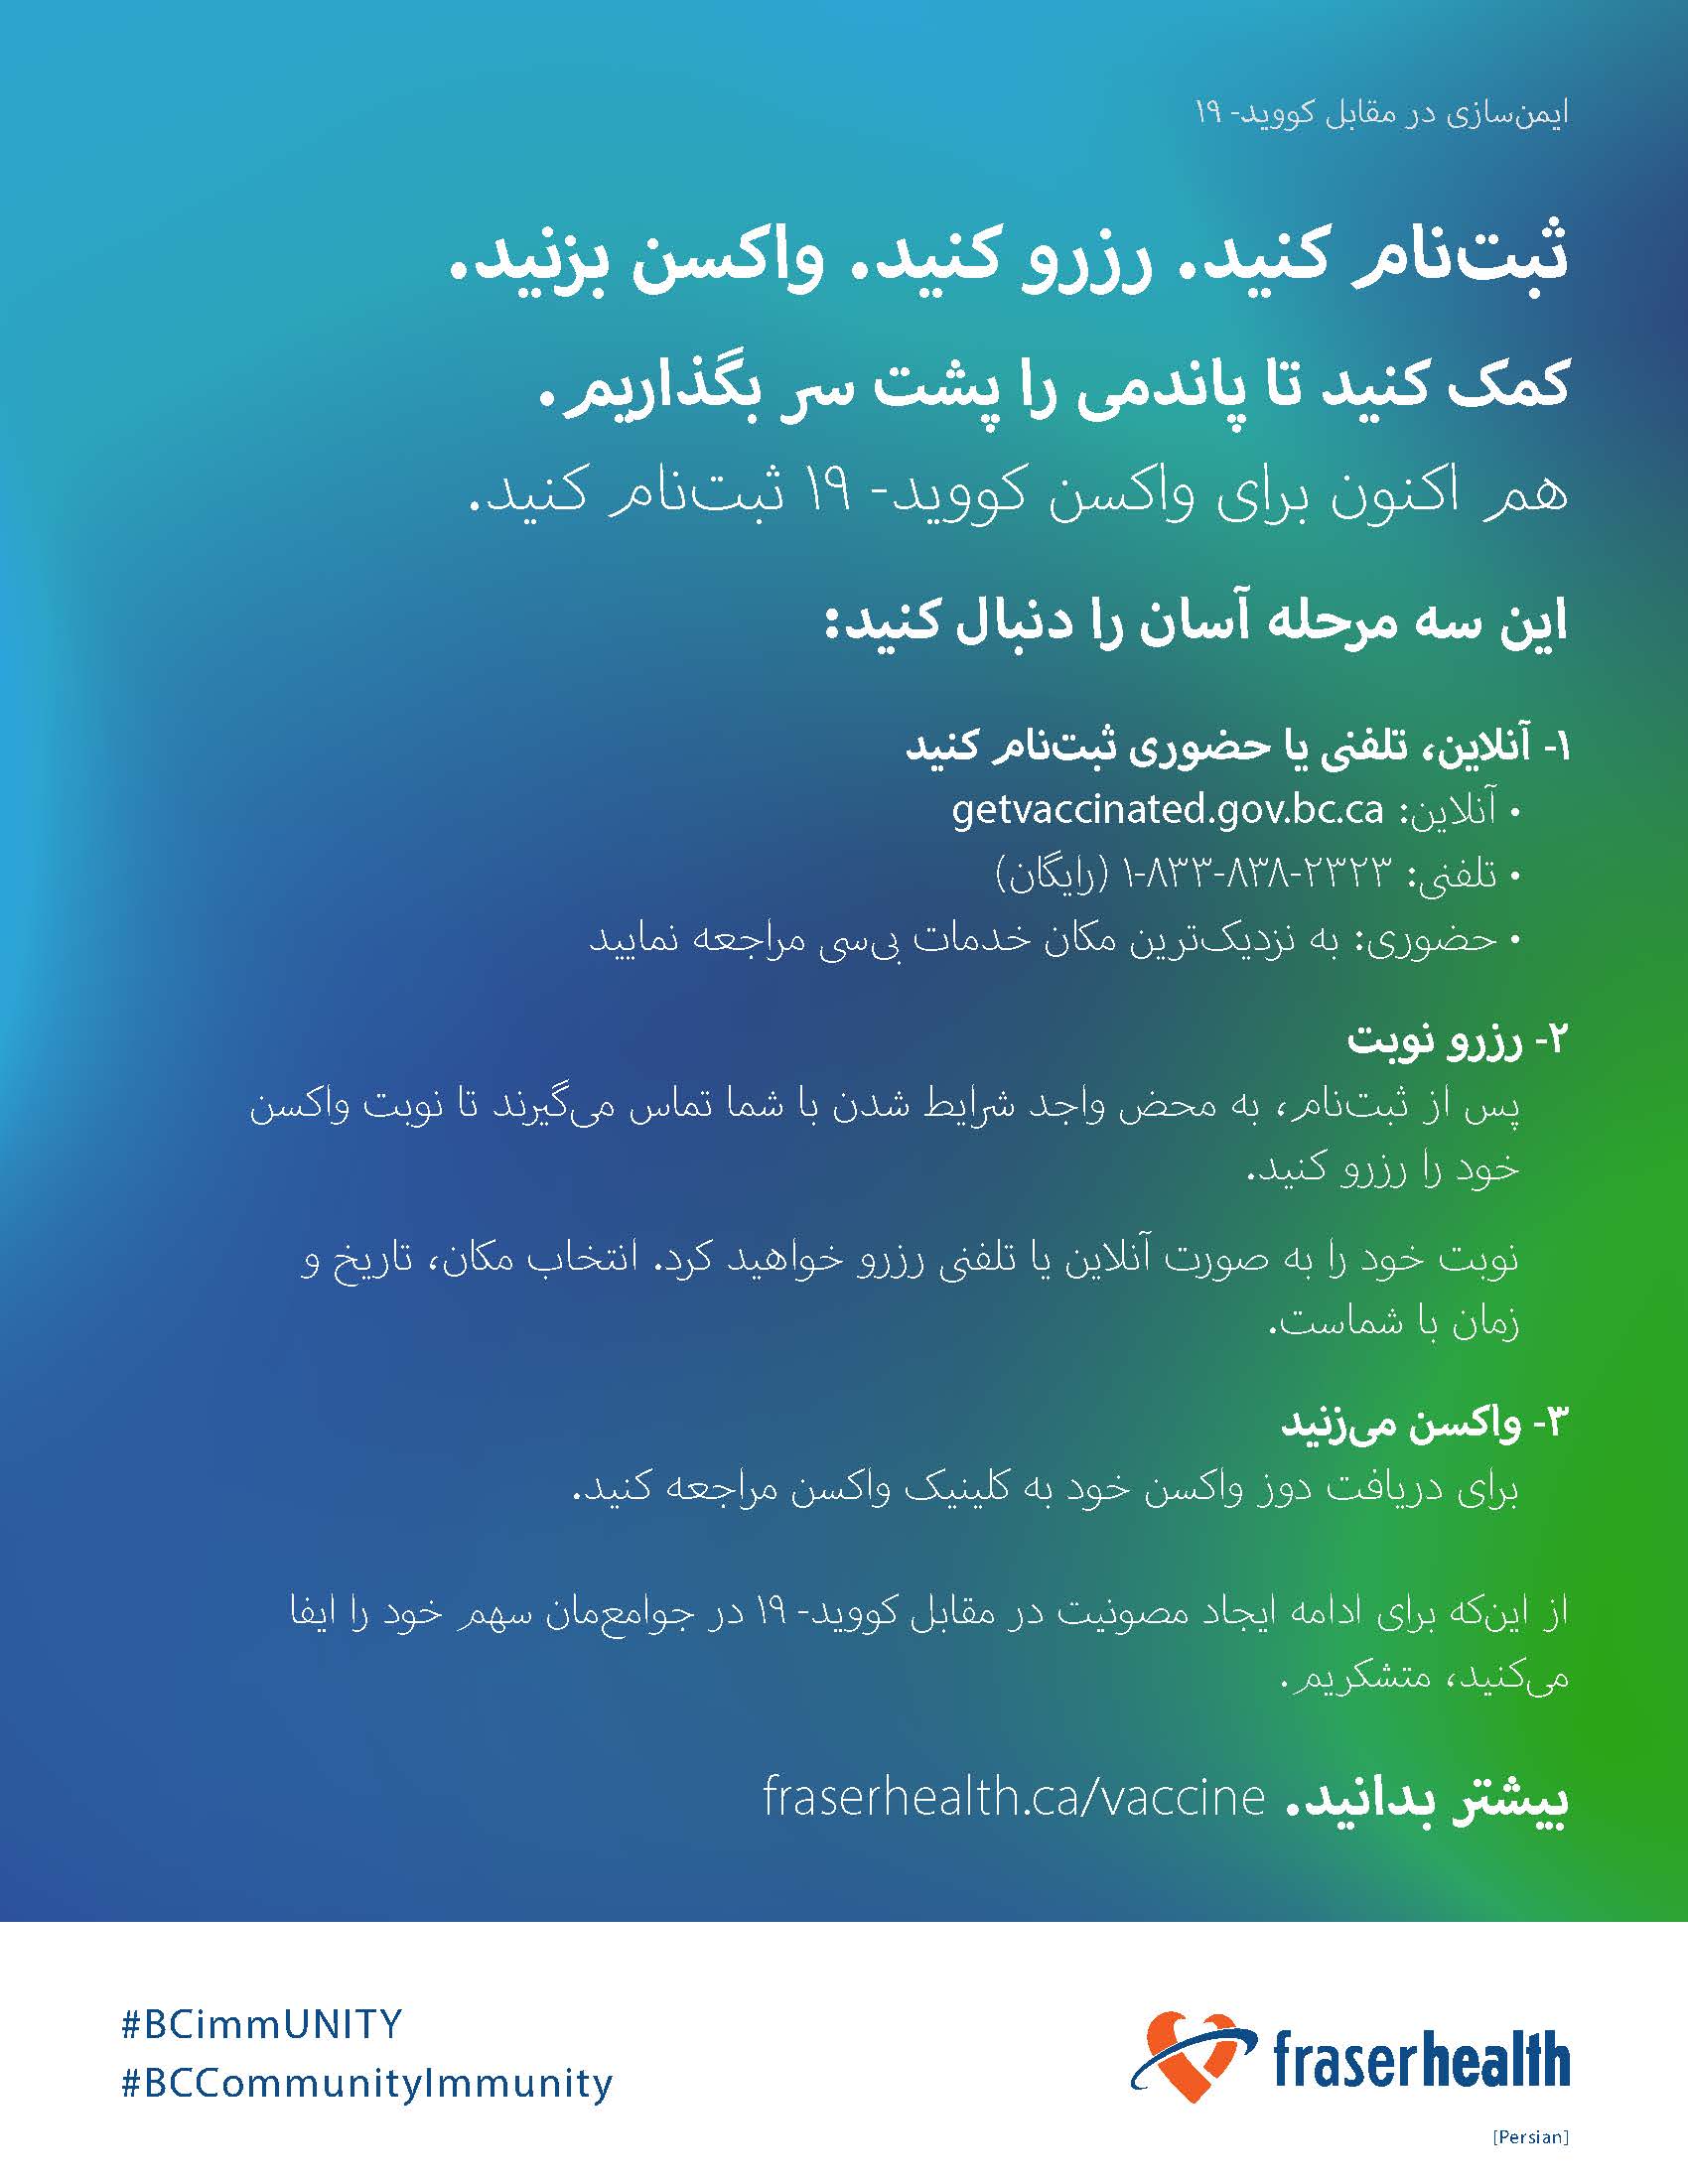 Vaccine registration for Persian in colour